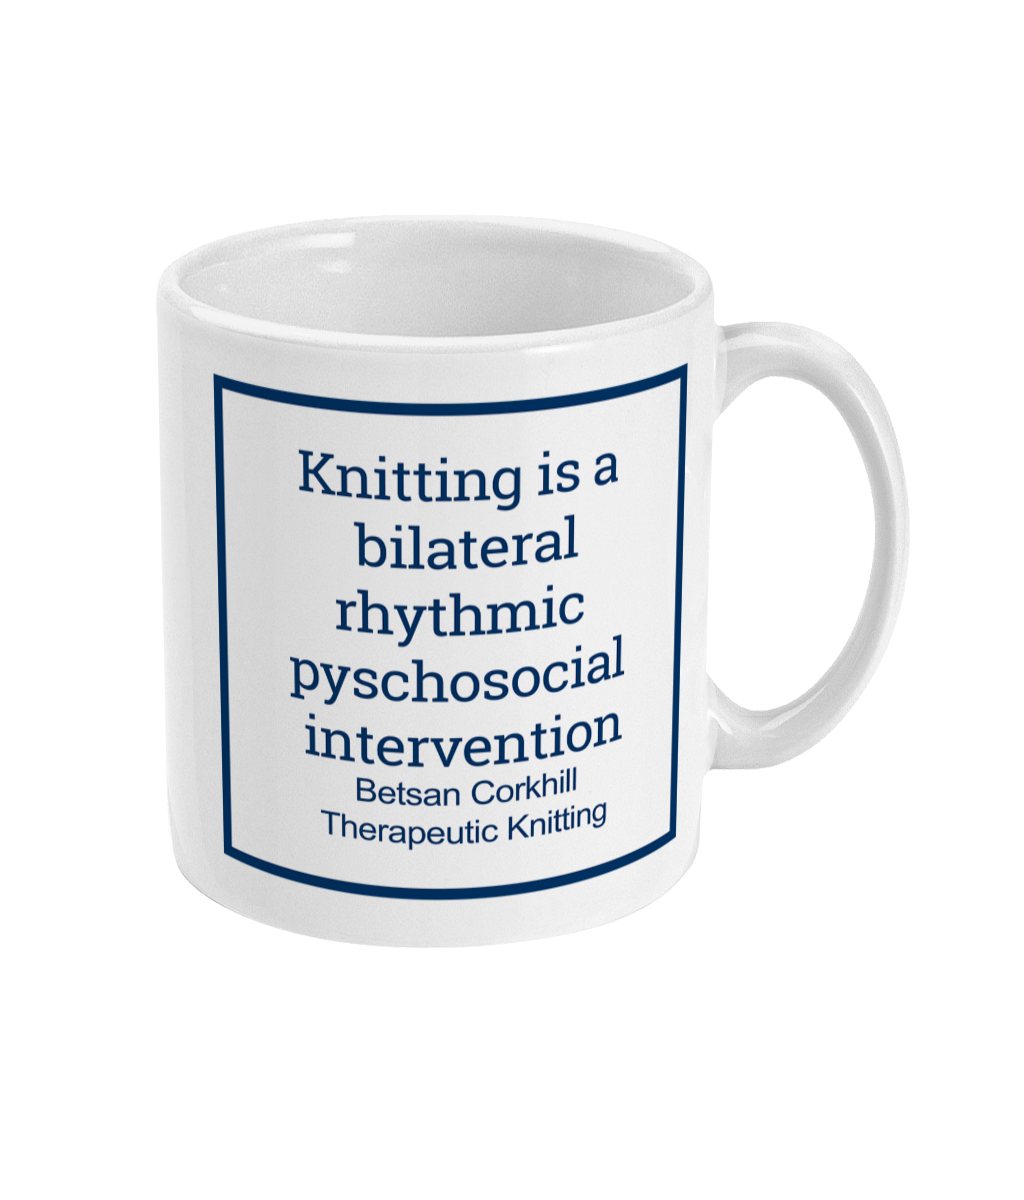 knitting is a bilateral rhythmic psychosocial intervention - a medical definition of knitting